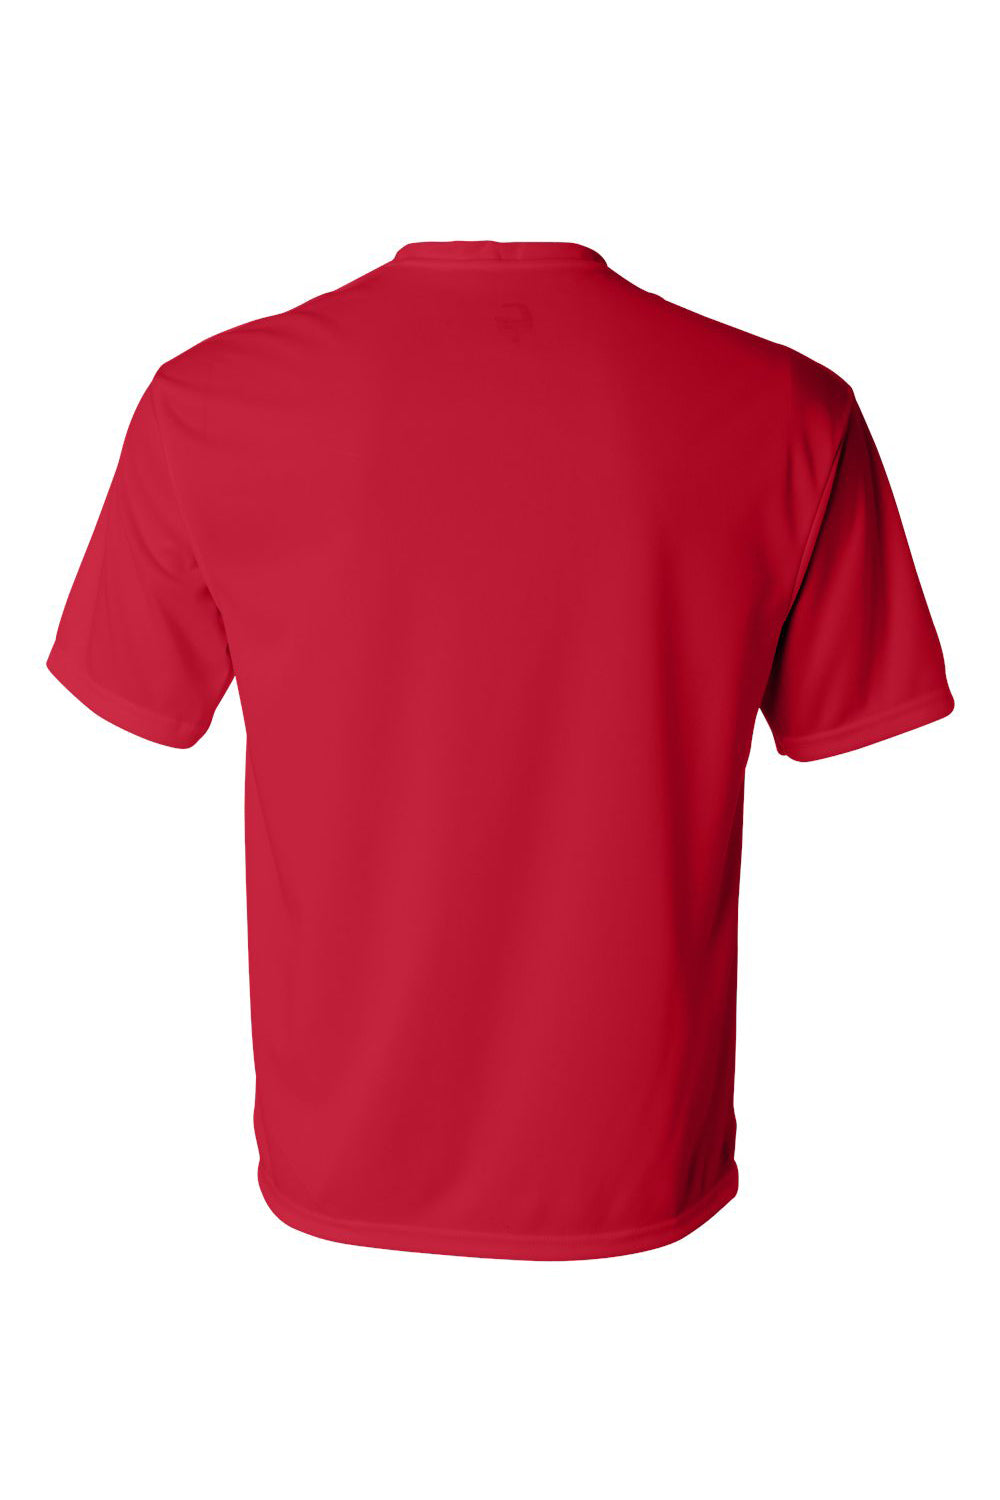 C2 Sport 5100 Mens Performance Moisture Wicking Short Sleeve Crewneck T-Shirt Red Flat Back